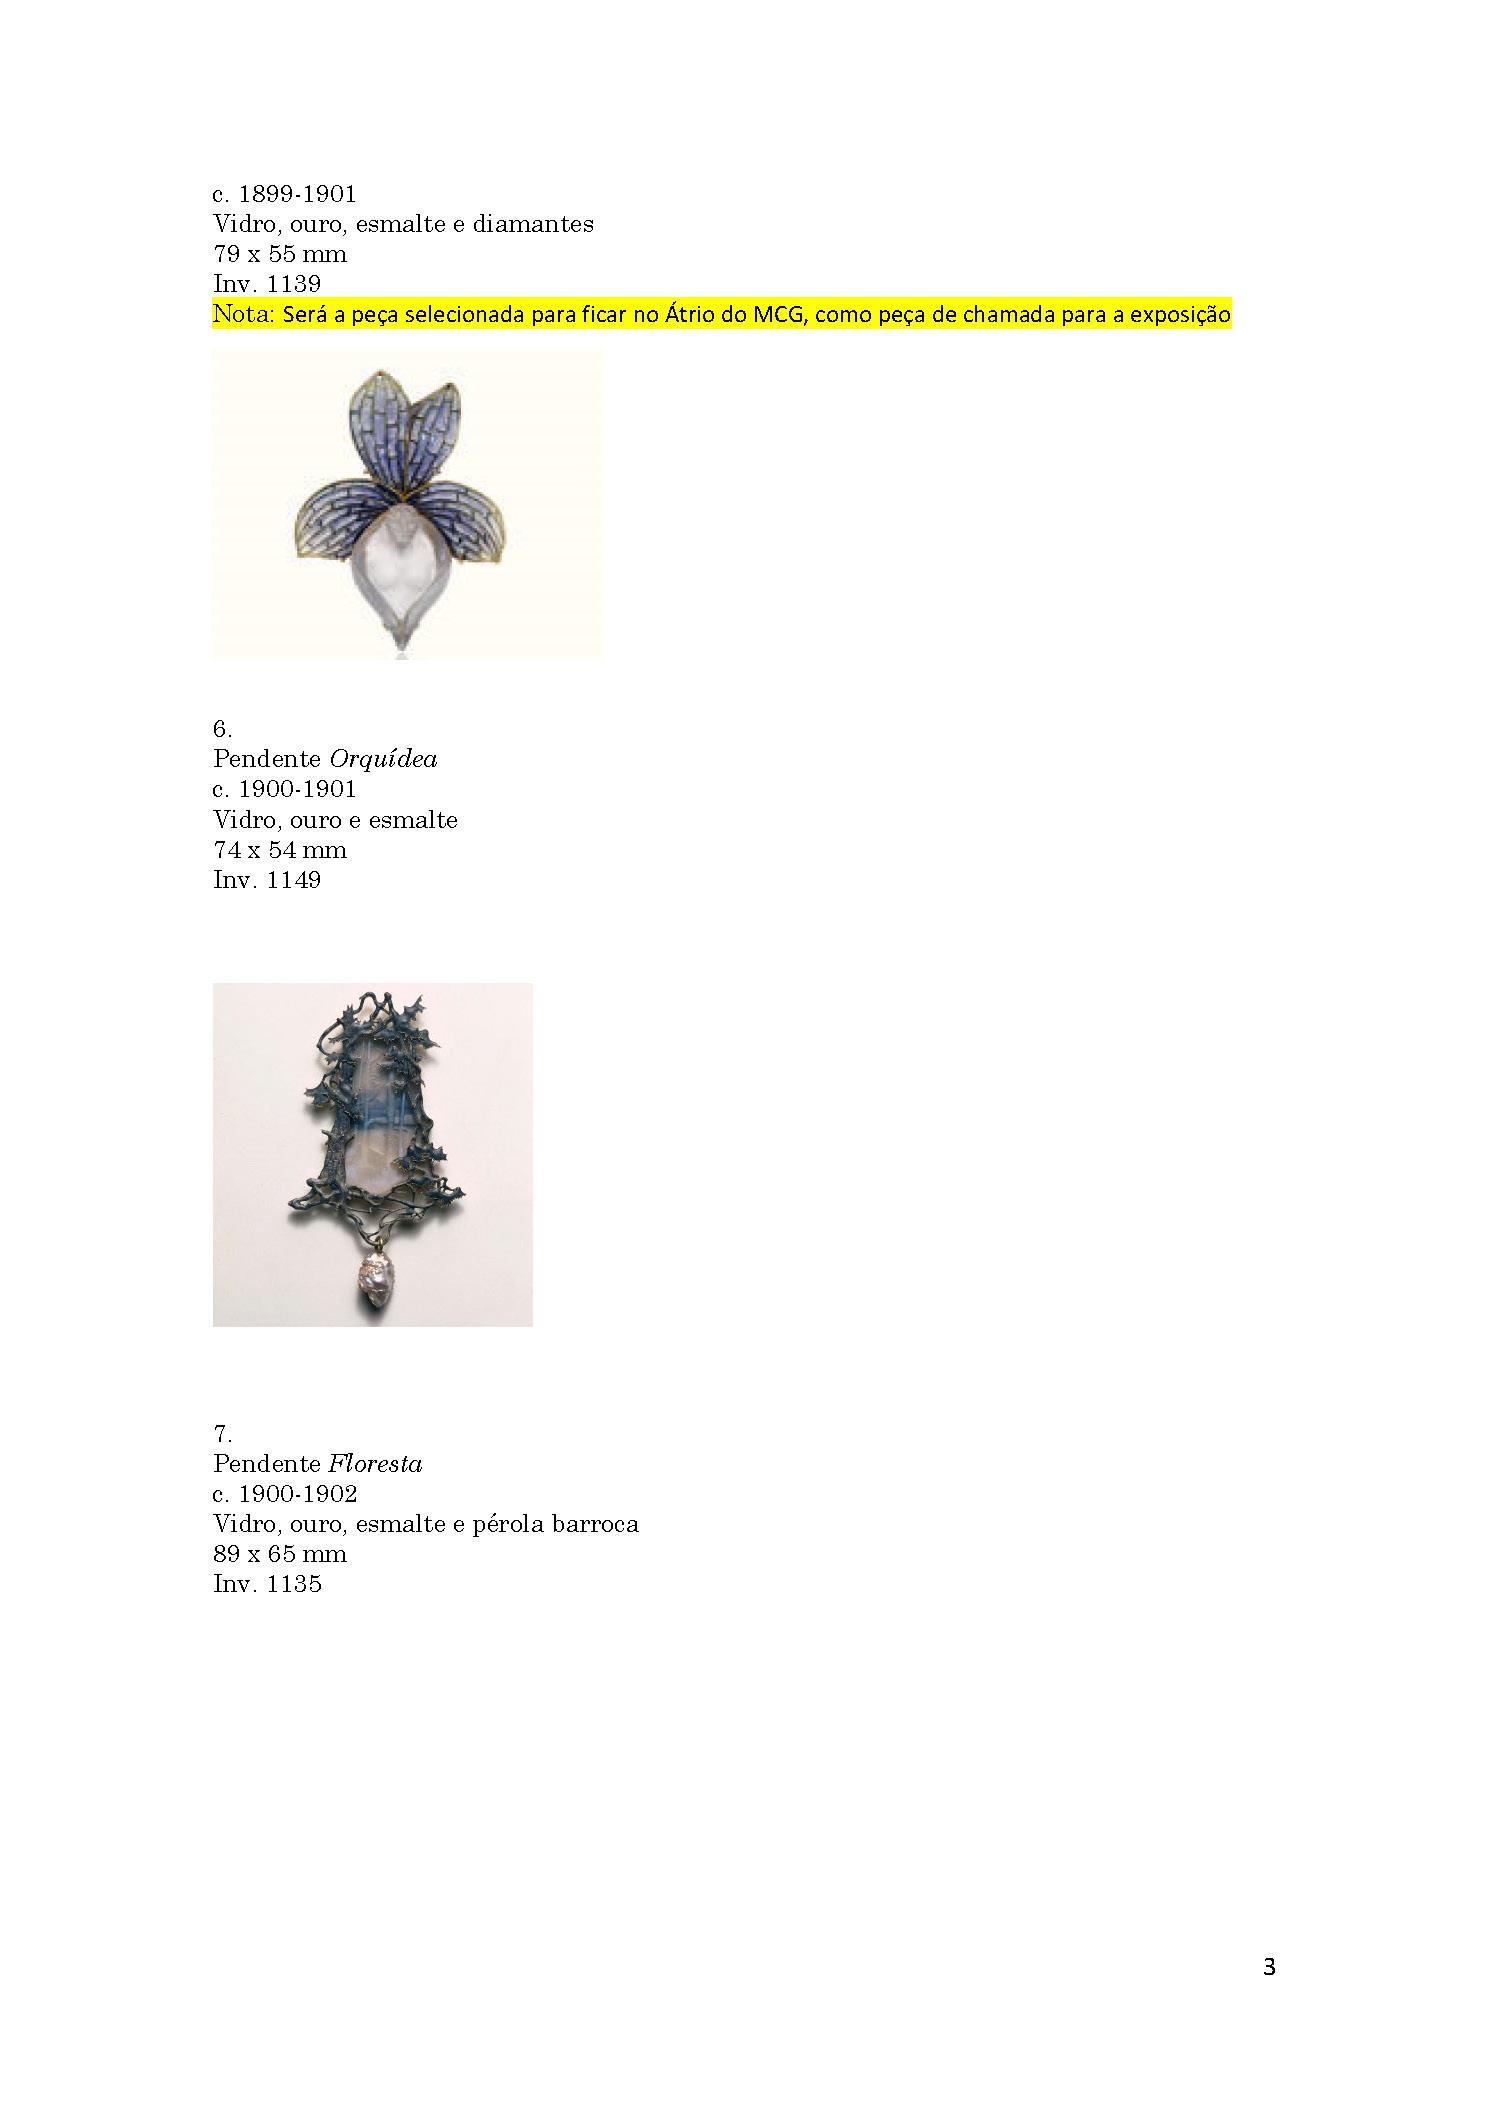 Lista_Vidros_Lalique_25.09.2020_1.3